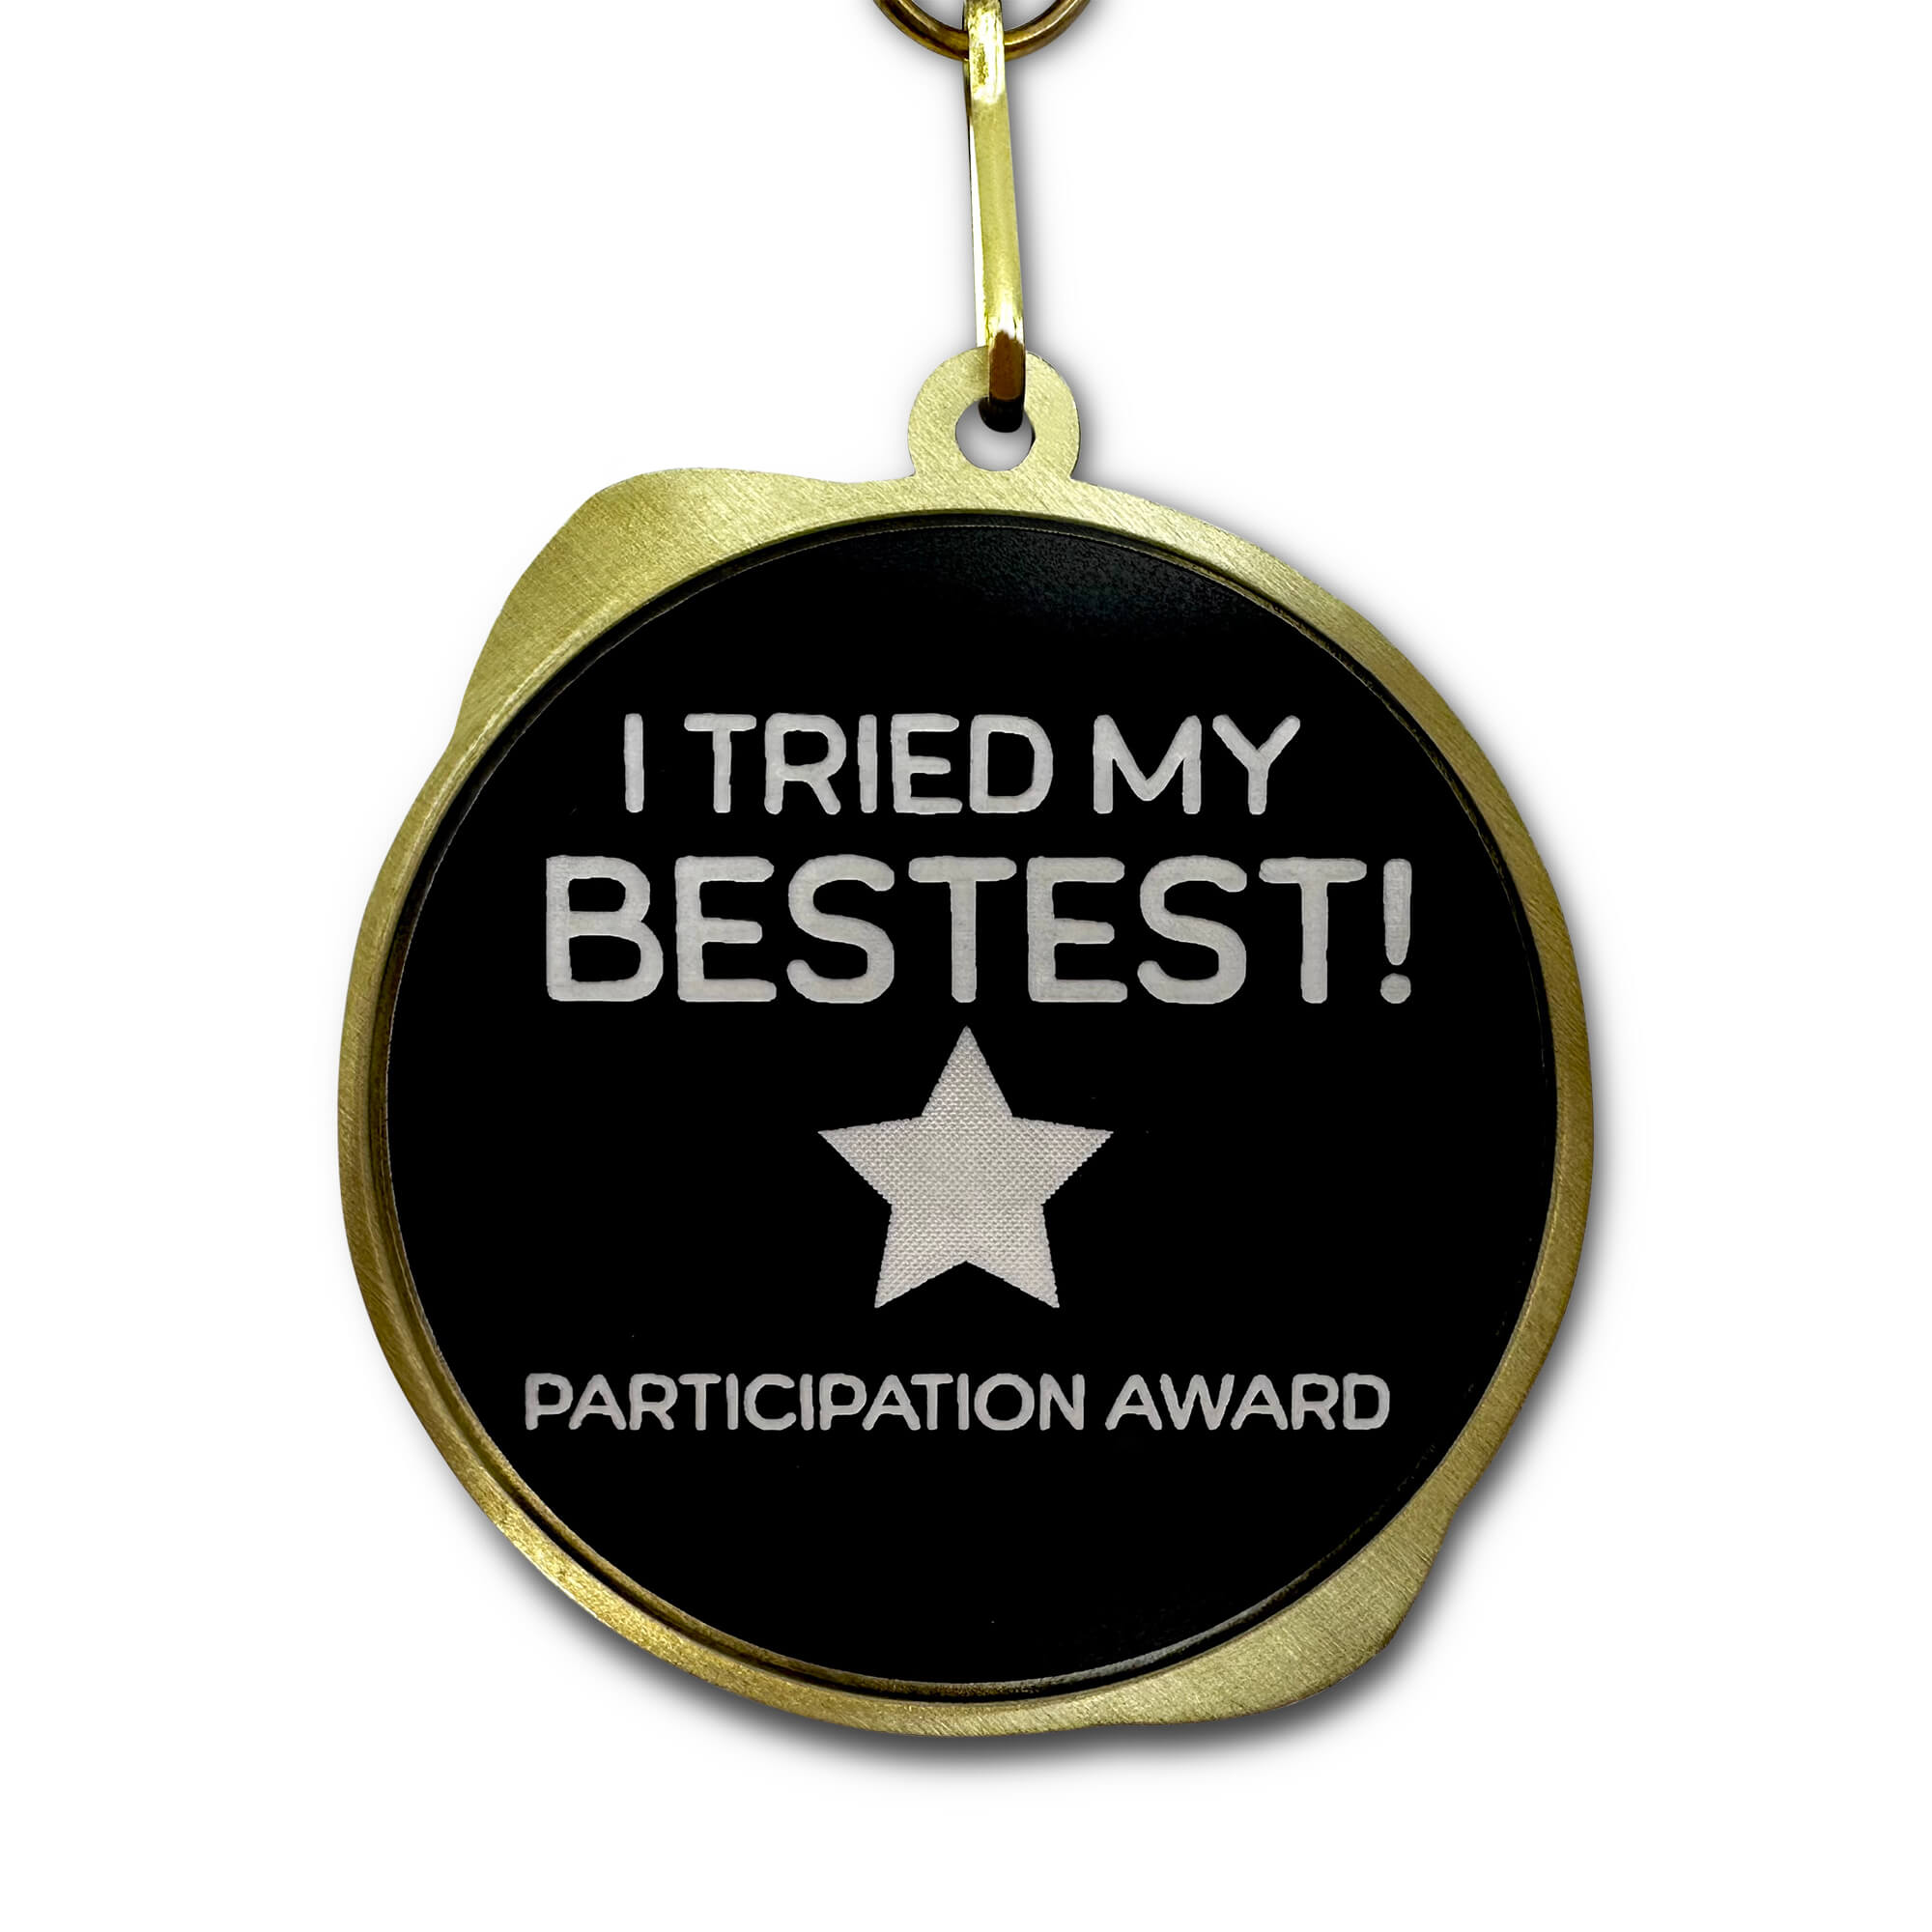 Participation Award